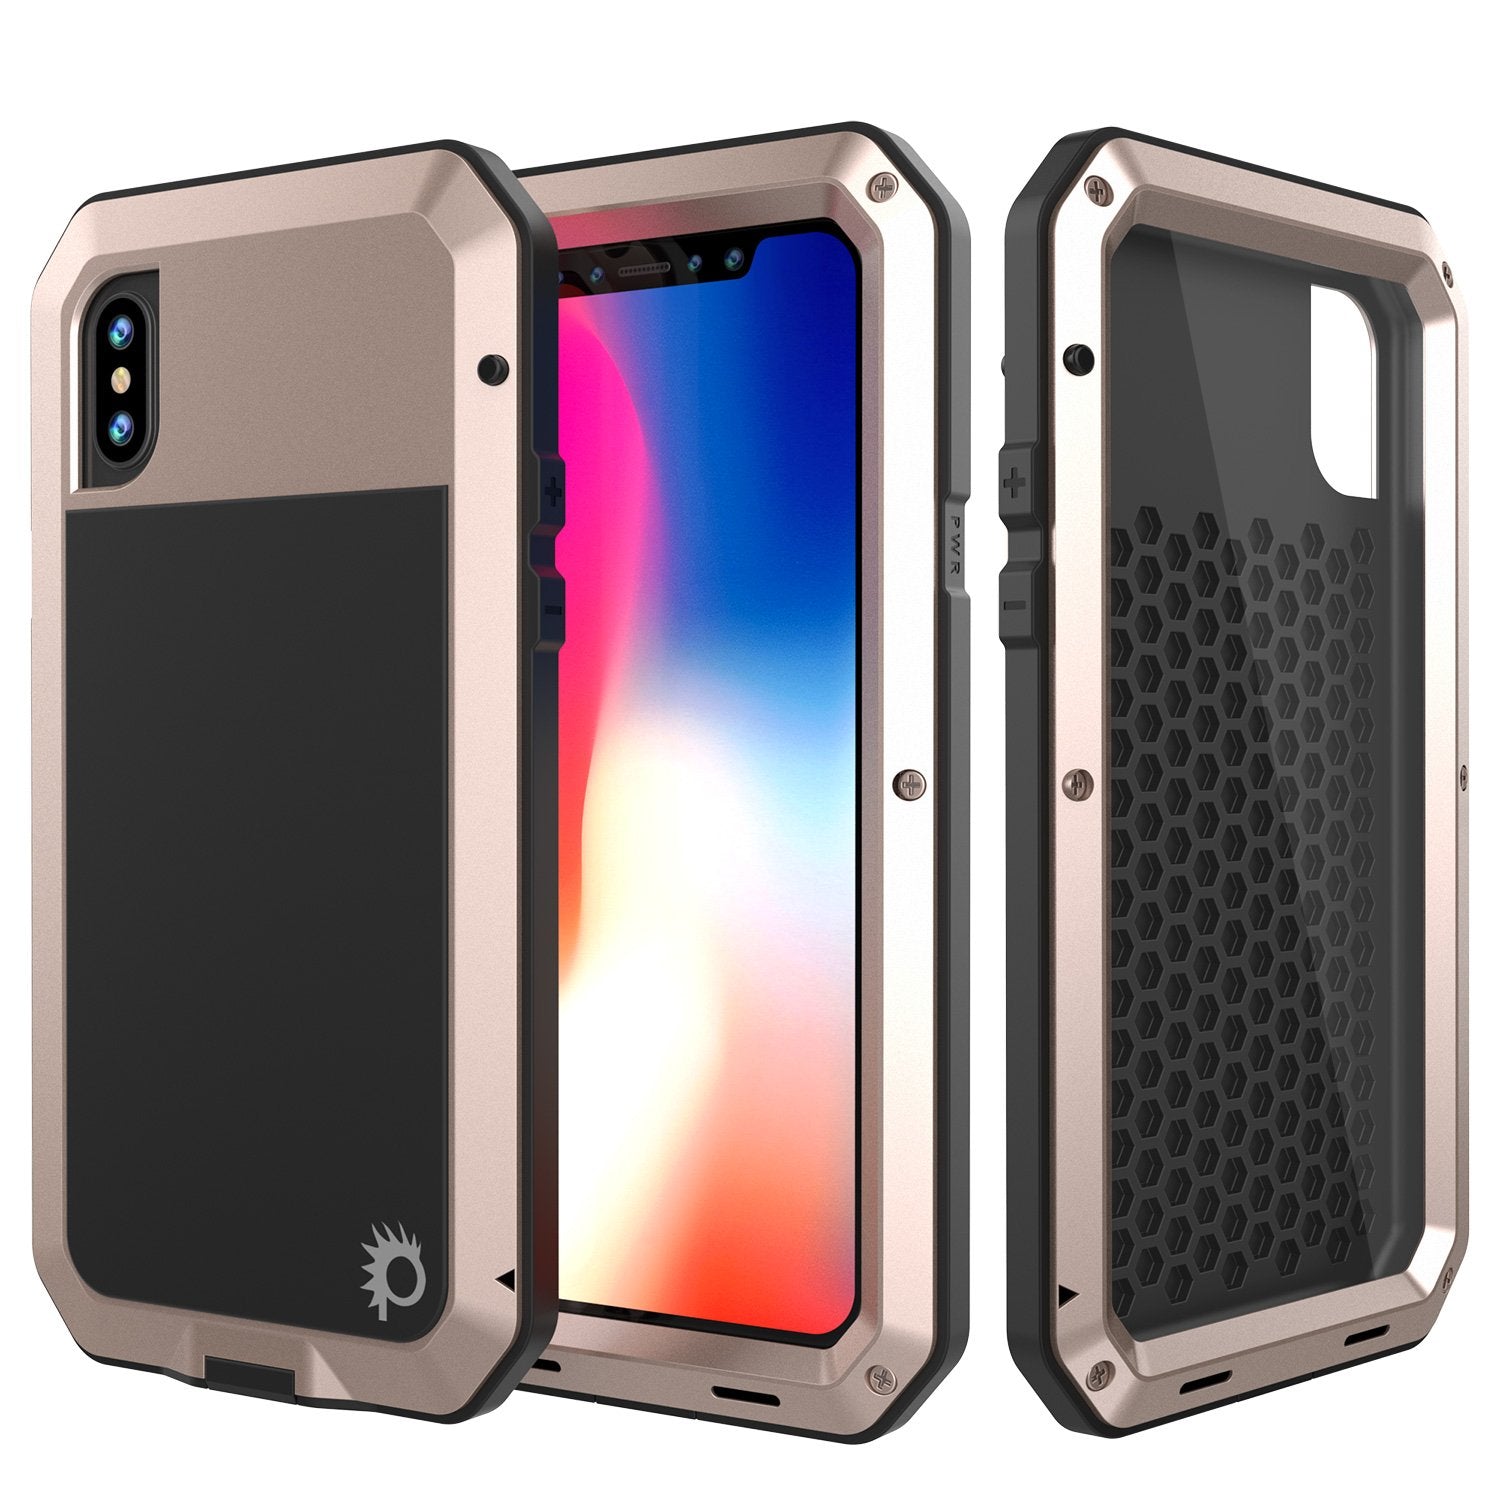 IPhone XR Case - LV Metal